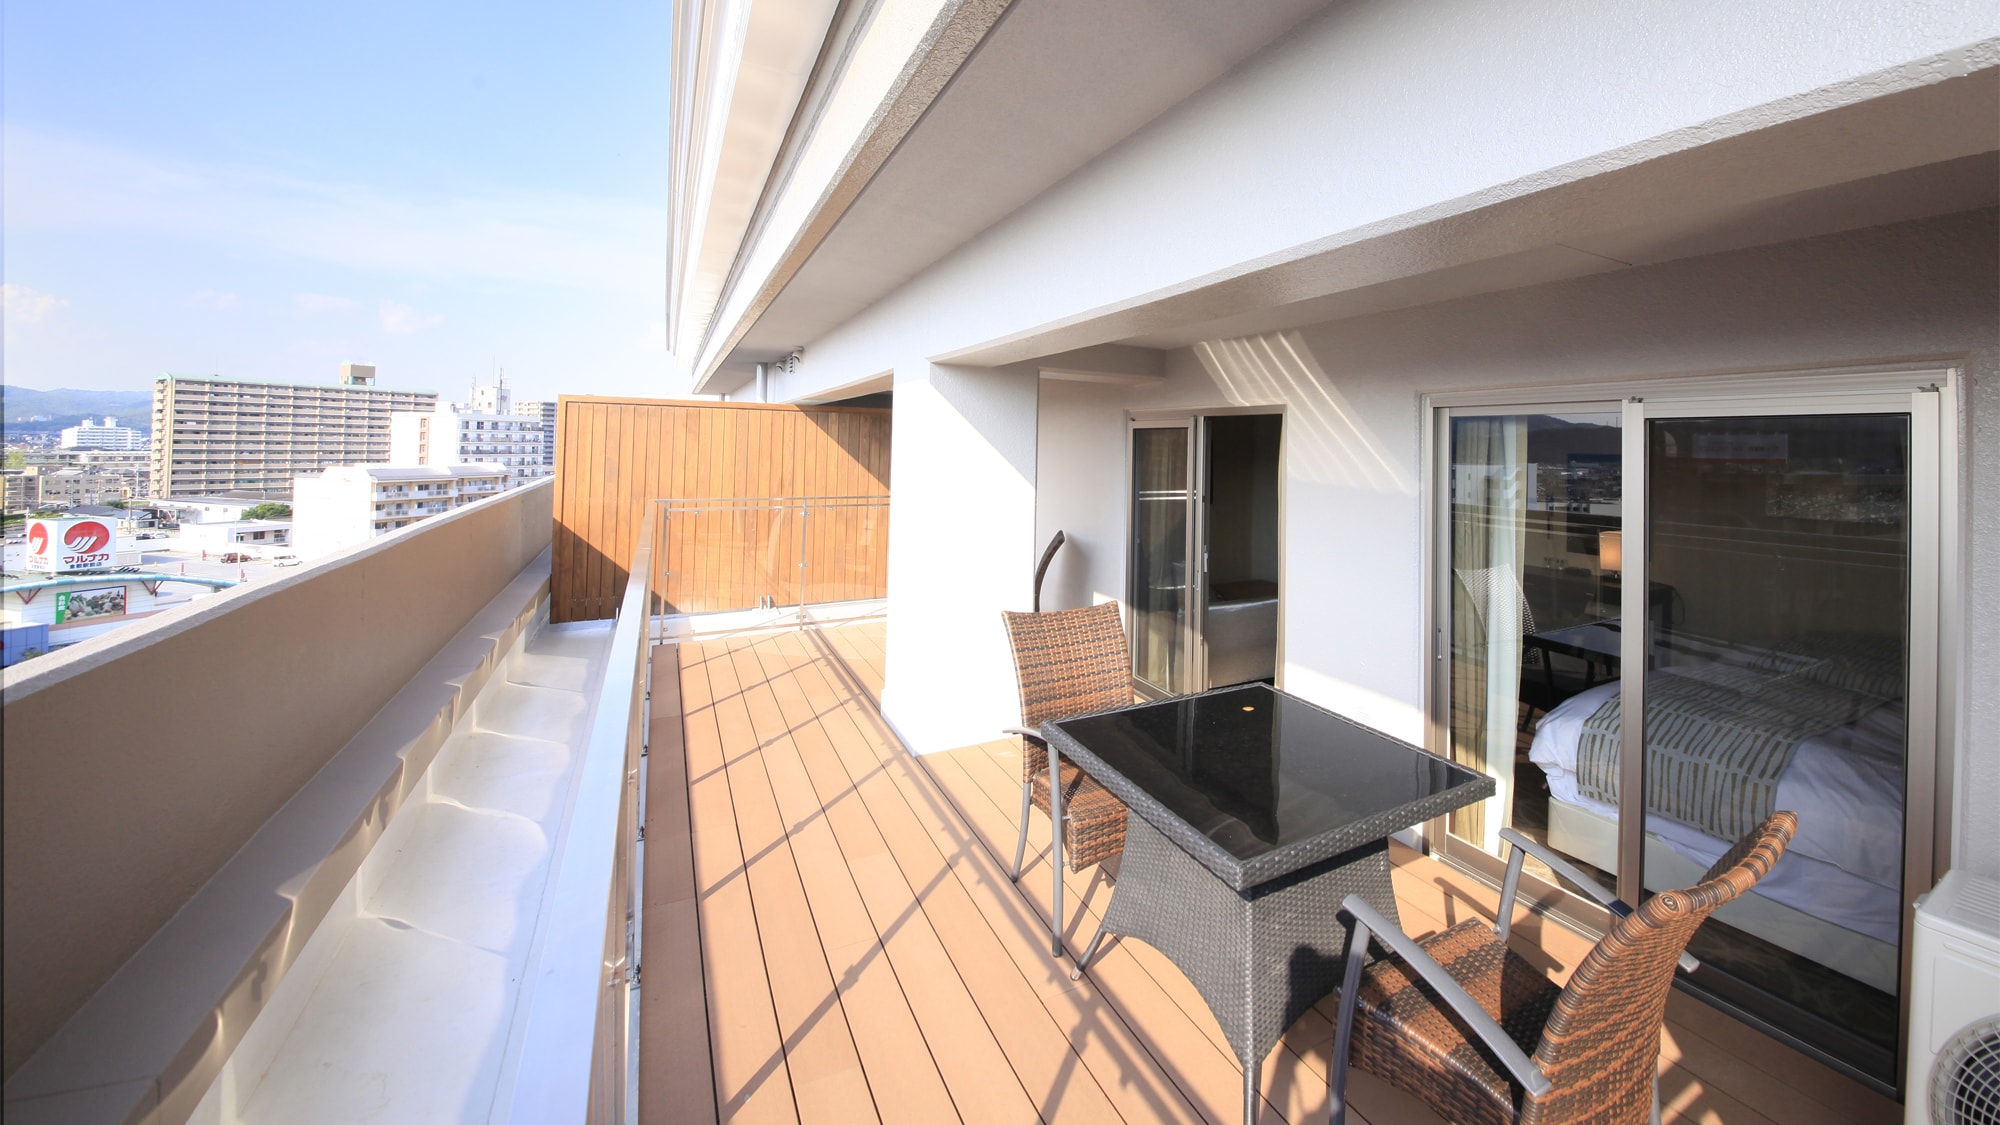 ◆ Open-air bath with terrace ◆ Suite